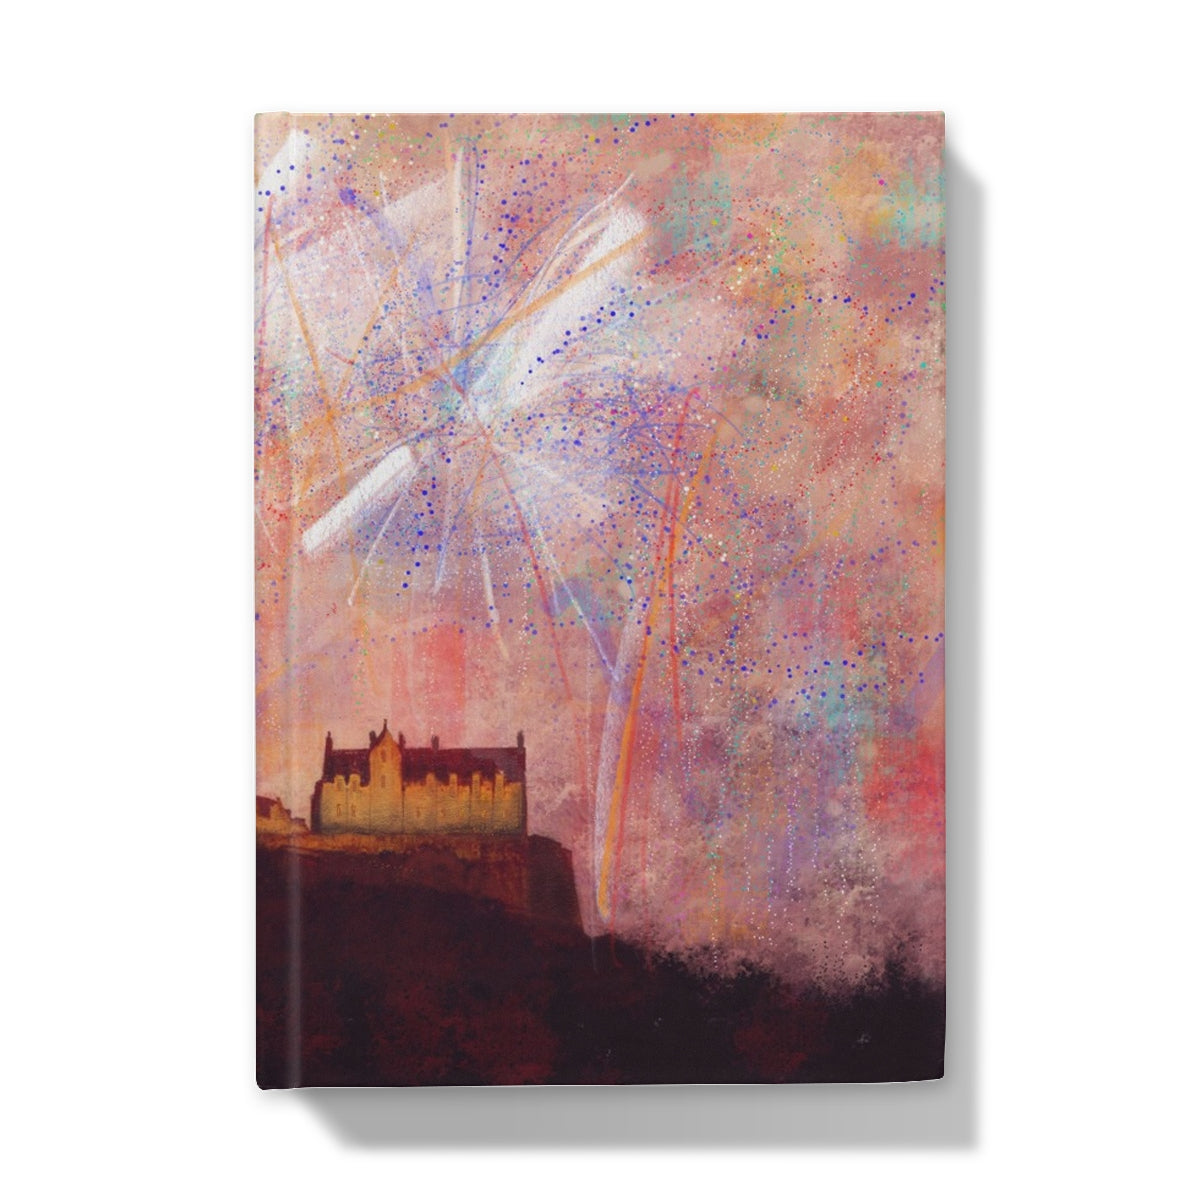 Edinburgh Castle Fireworks Art Gifts Hardback Journal-Journals & Notebooks-Edinburgh & Glasgow Art Gallery-A4-Plain-Paintings, Prints, Homeware, Art Gifts From Scotland By Scottish Artist Kevin Hunter